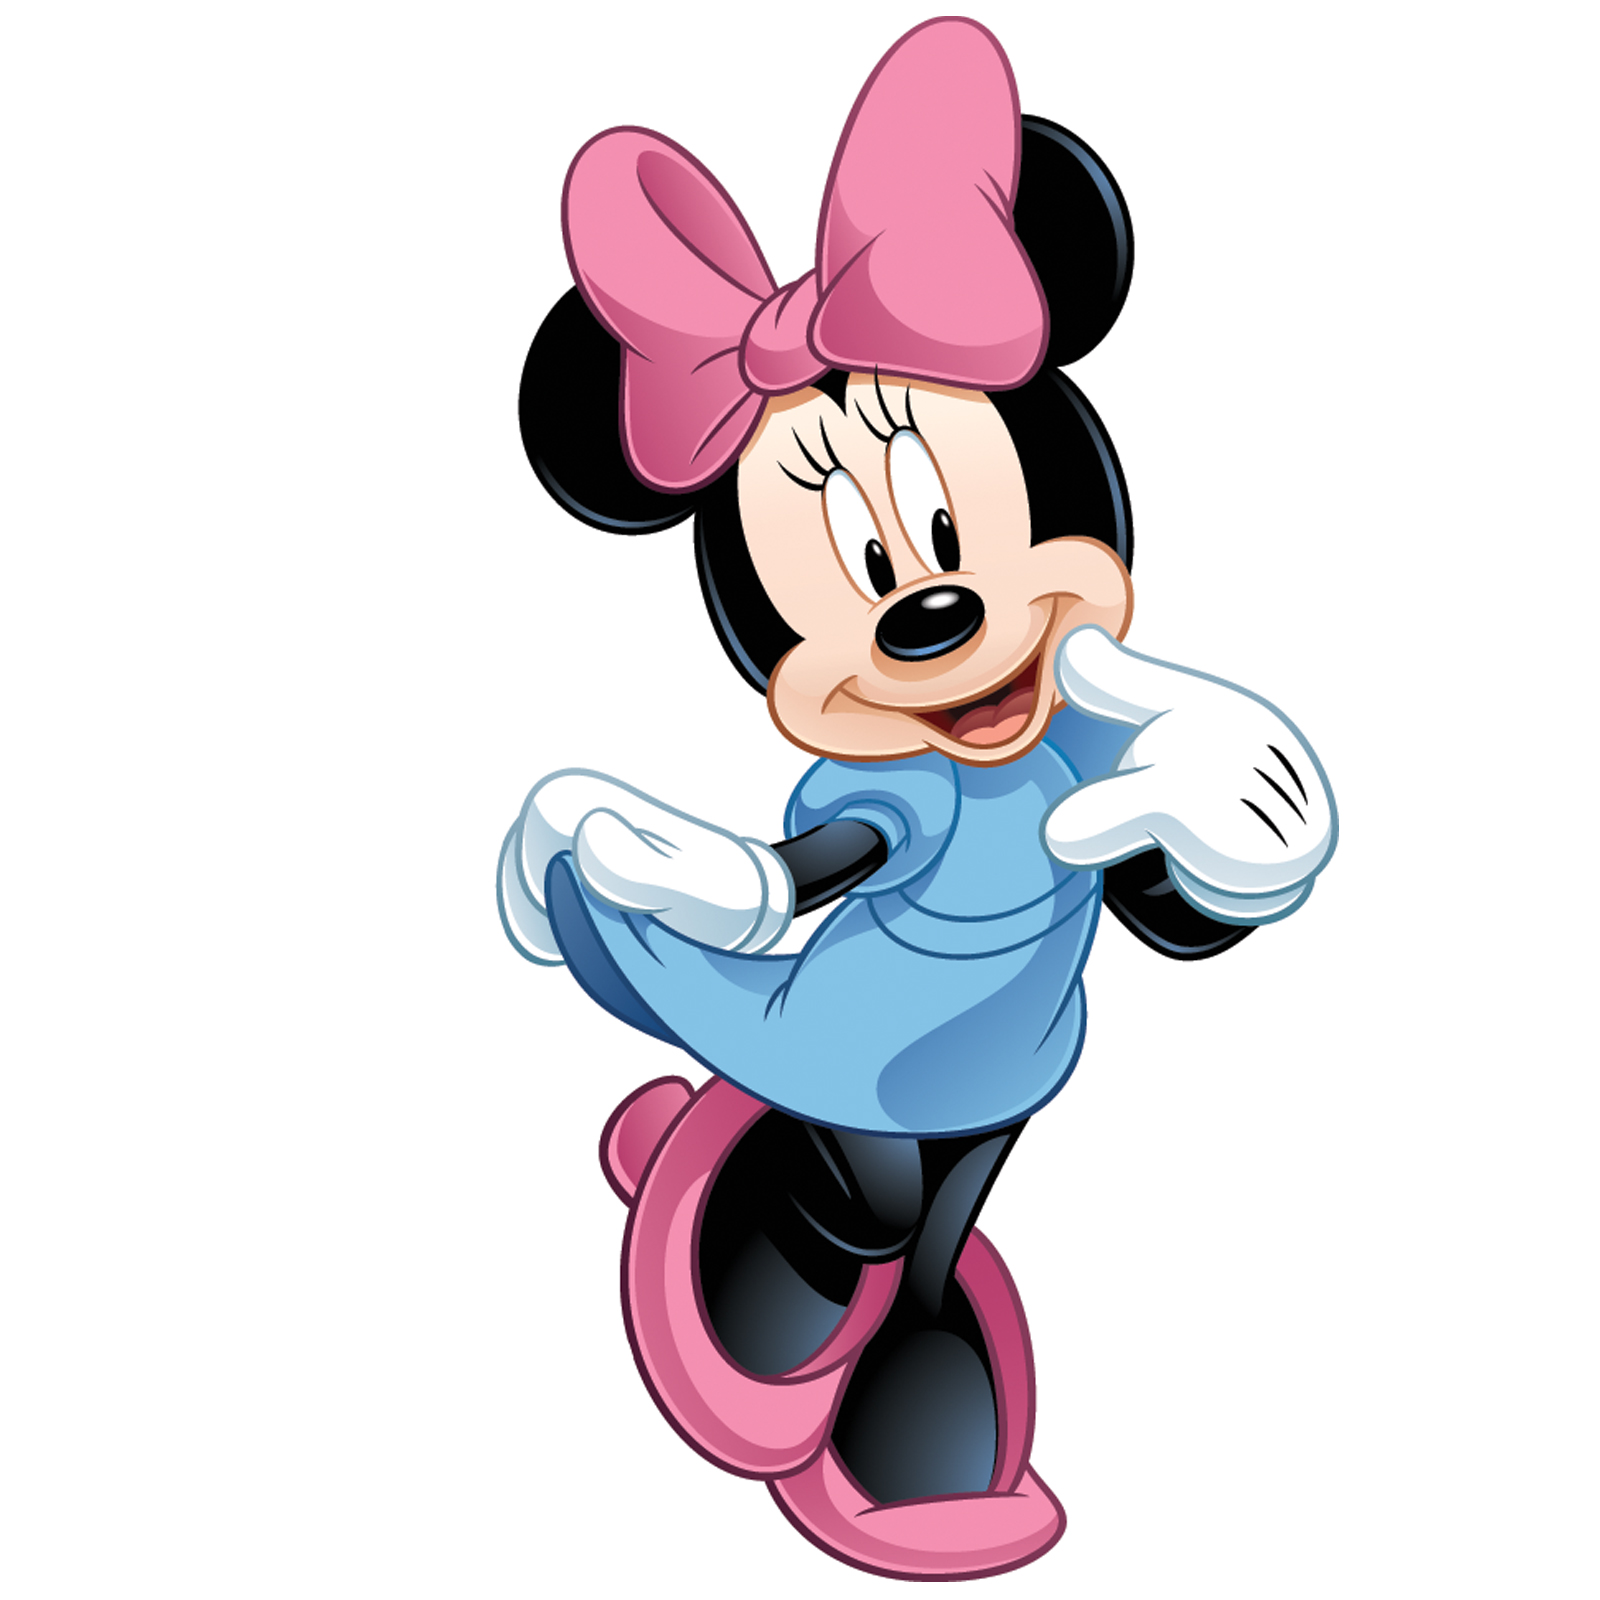 Image - Minnie-mouse-cartoon-wallpaper.jpg - DisneyWiki